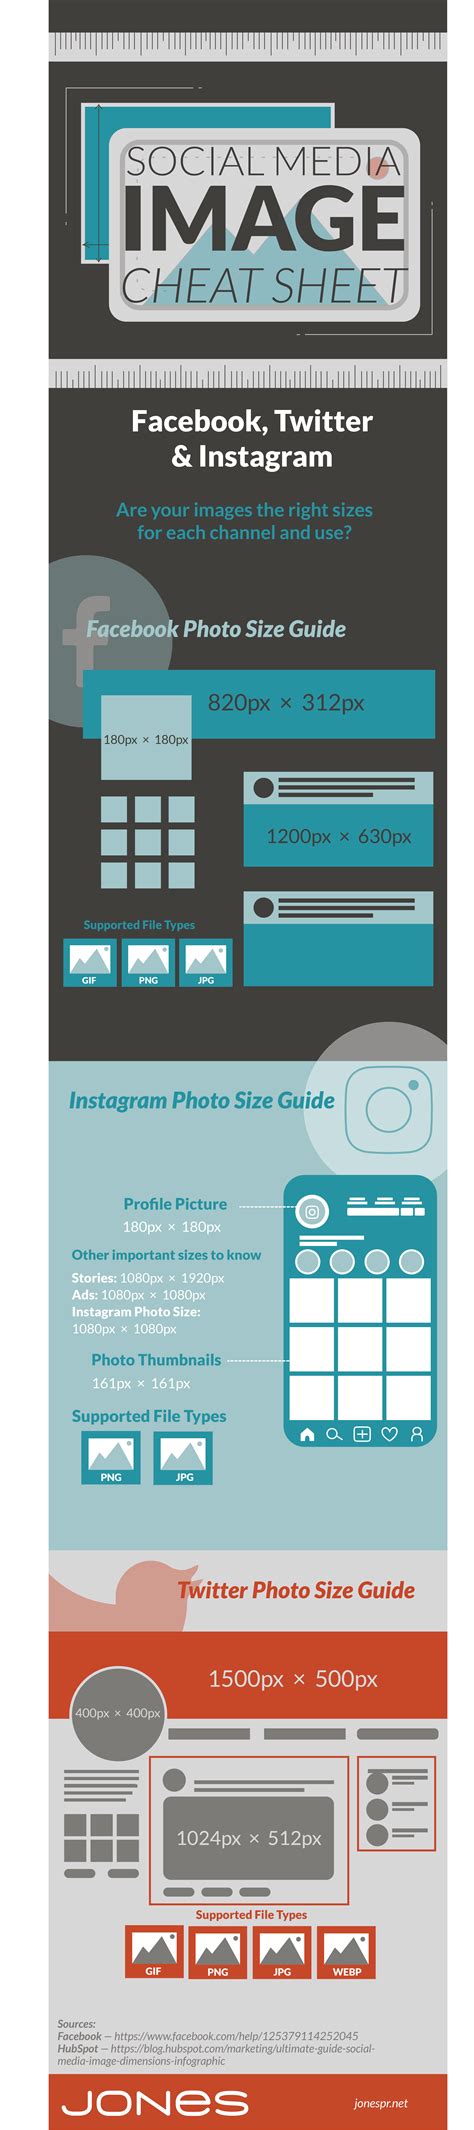 Social Media Image Size Cheat Sheet Infographic Optimum Dimensions